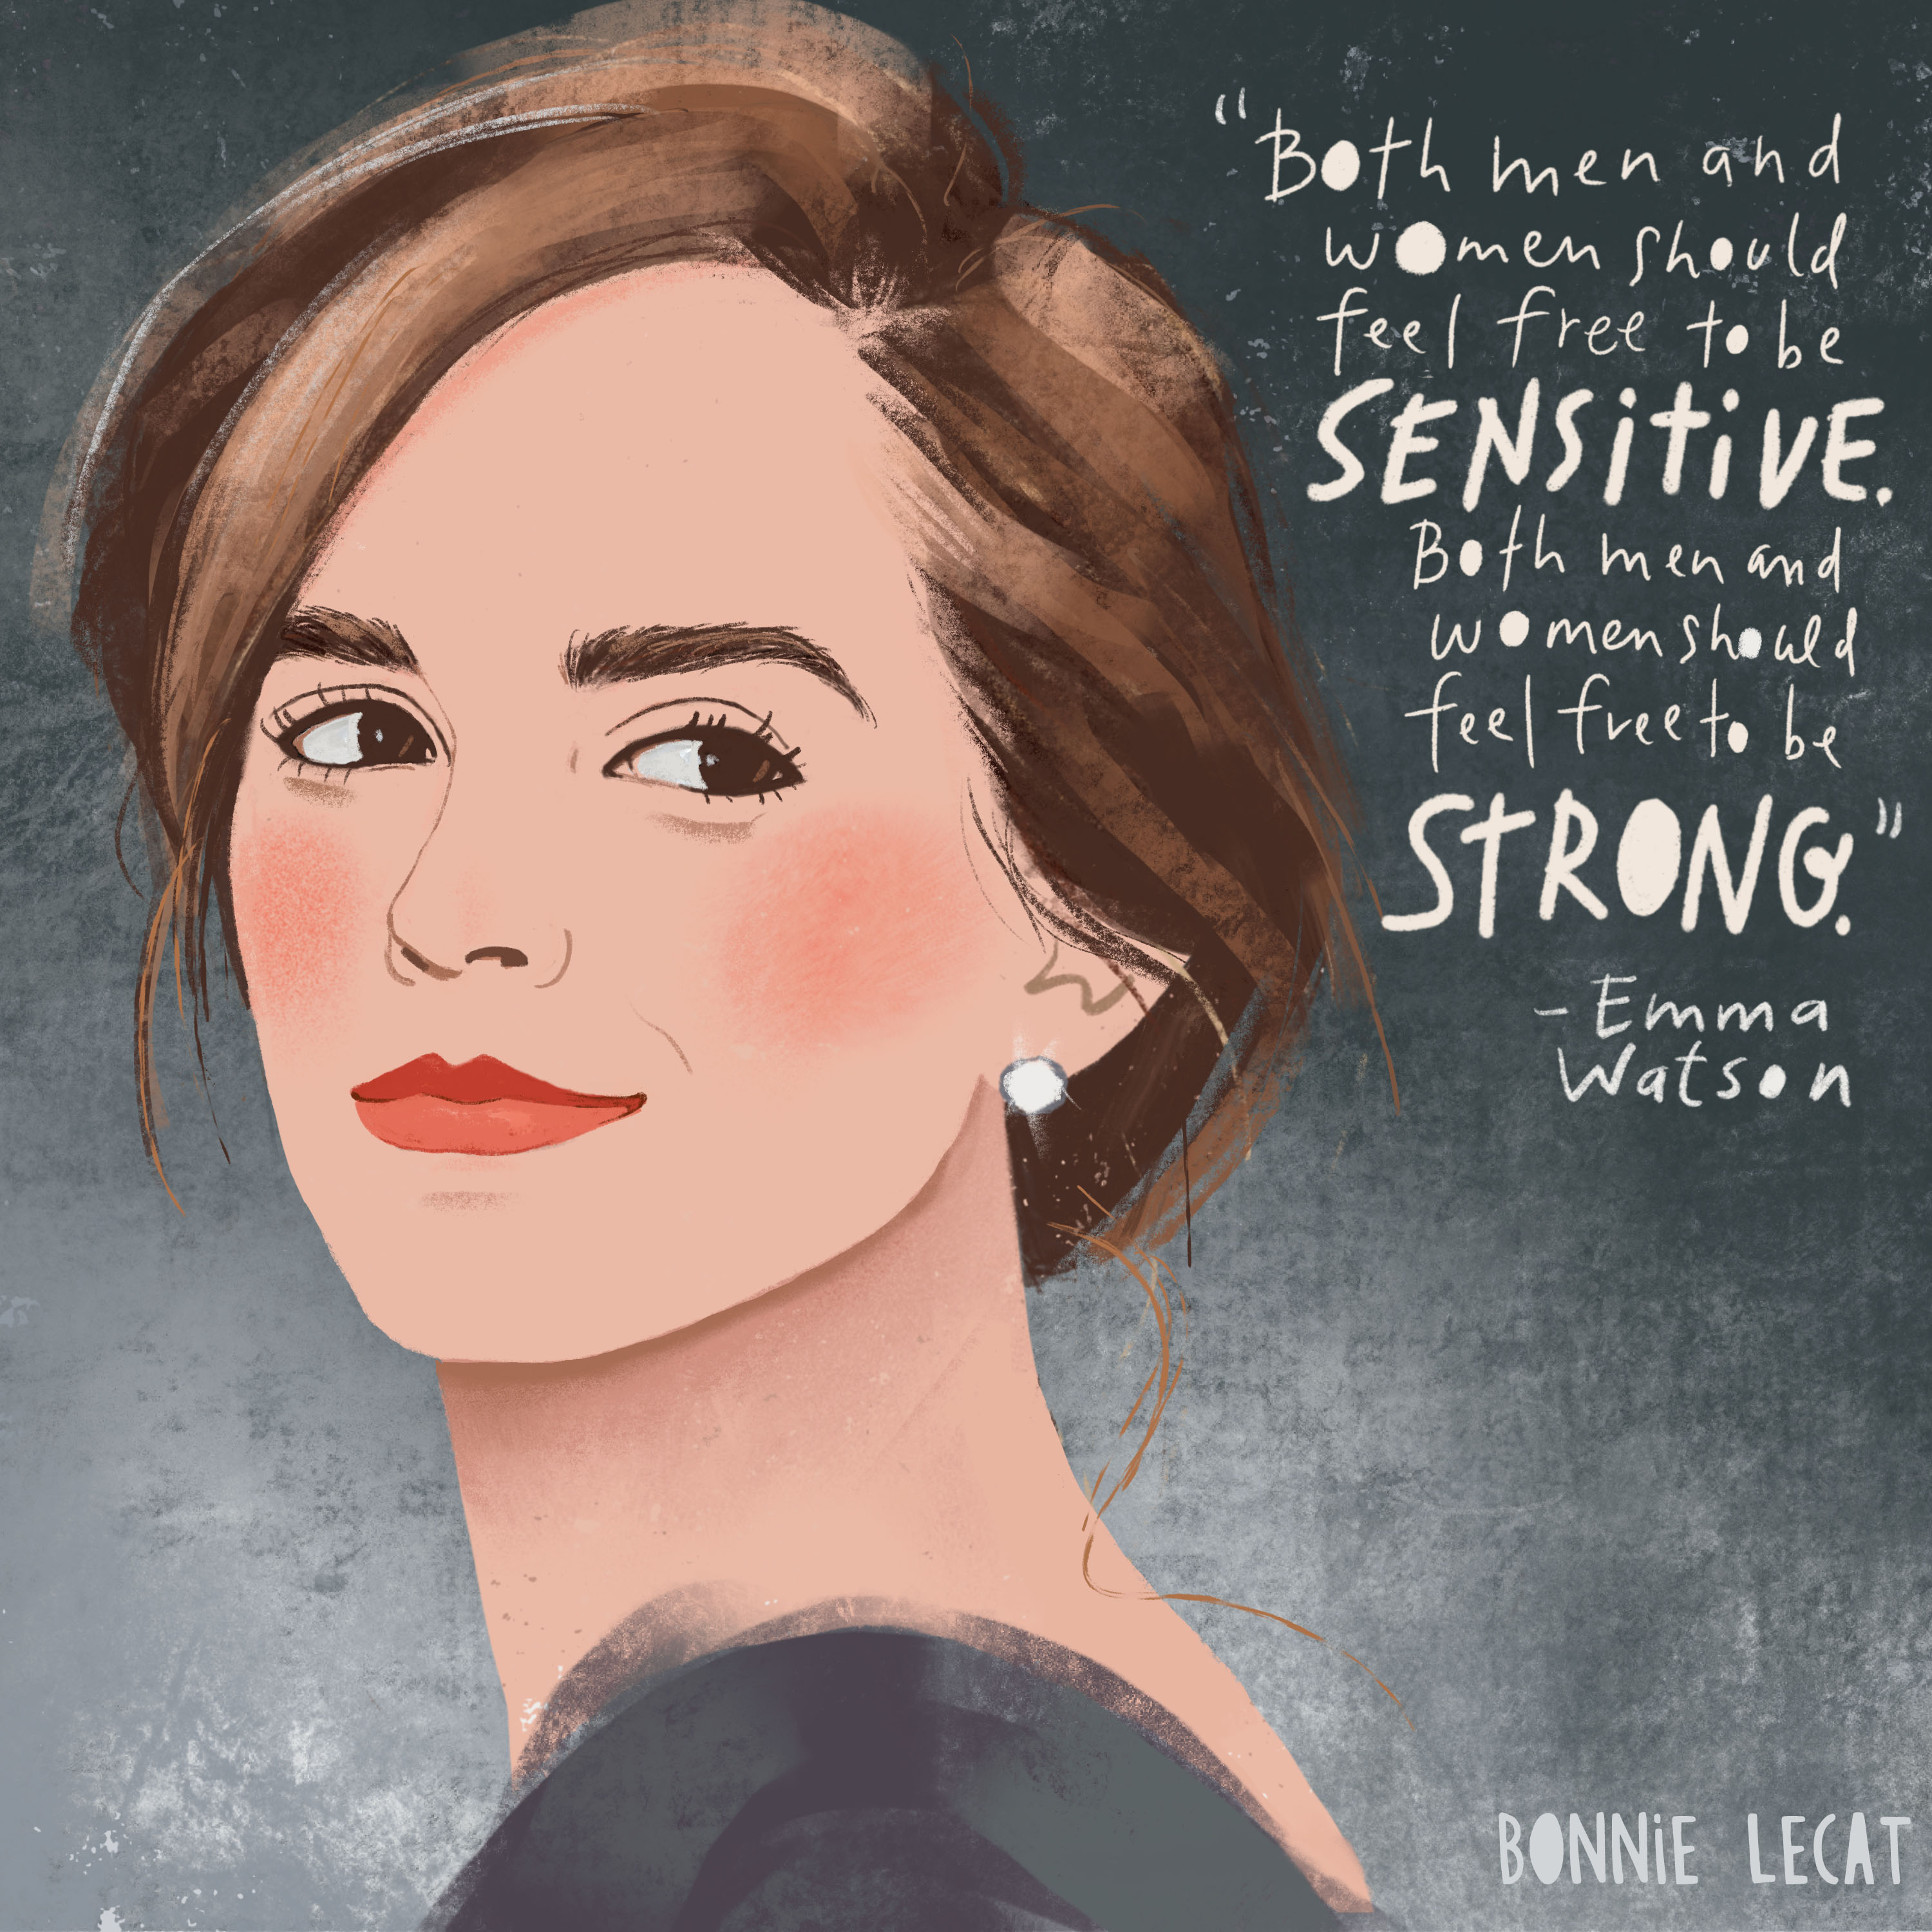 Emma Watson quote illustration by Bonnie Lecat.